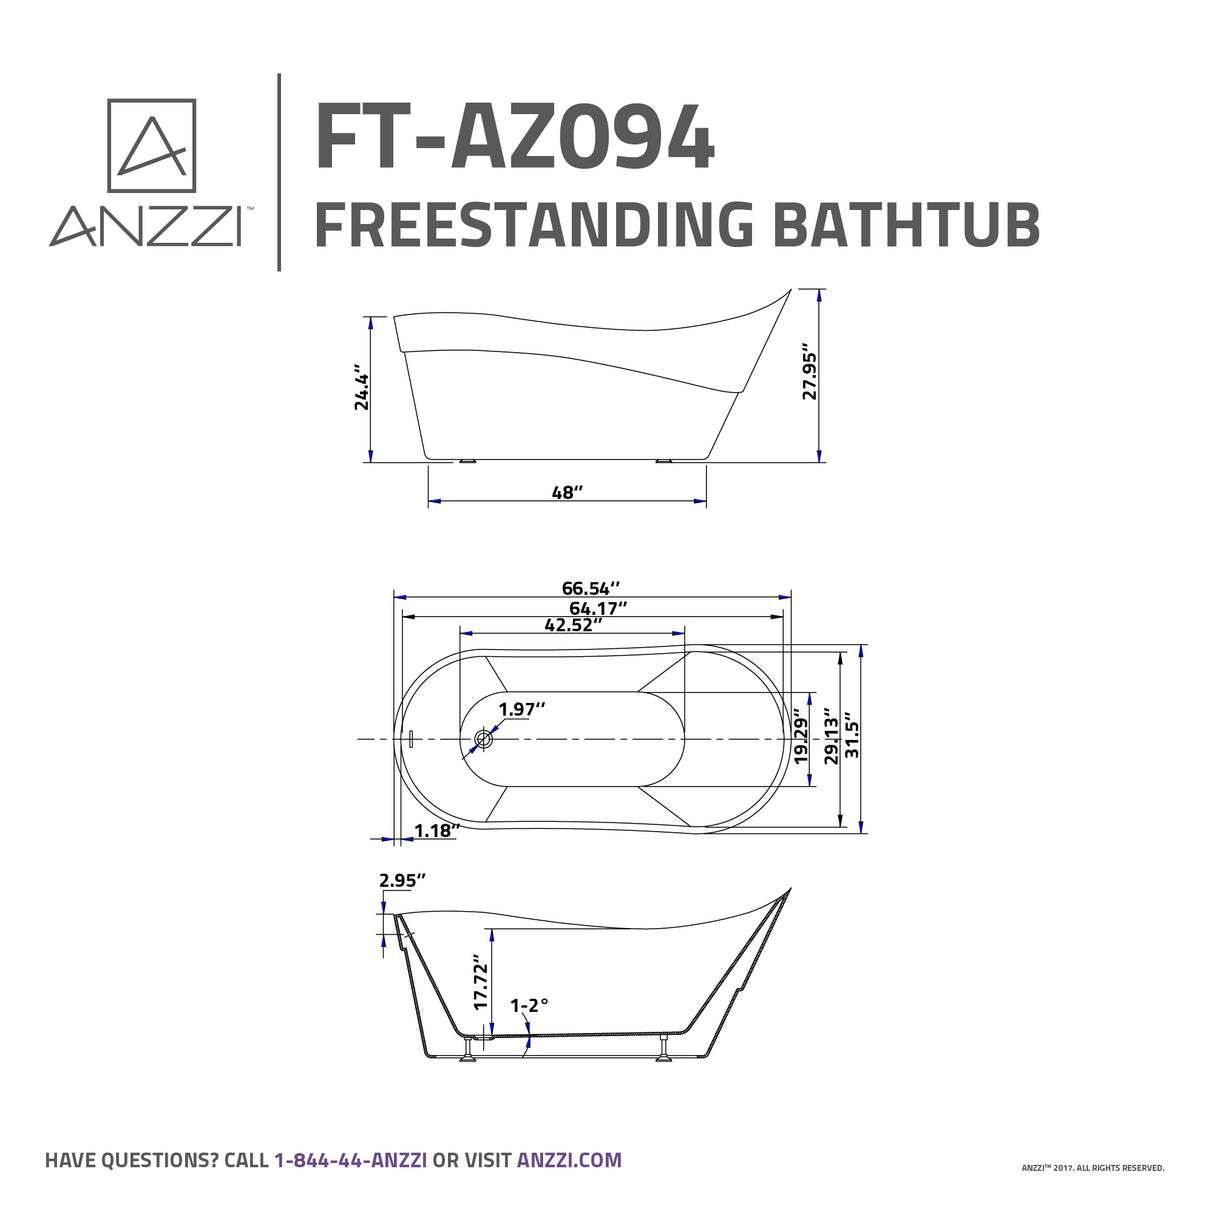 ANZZI FT-AZ094-R Series 5.58 ft. Freestanding Bathtub in White